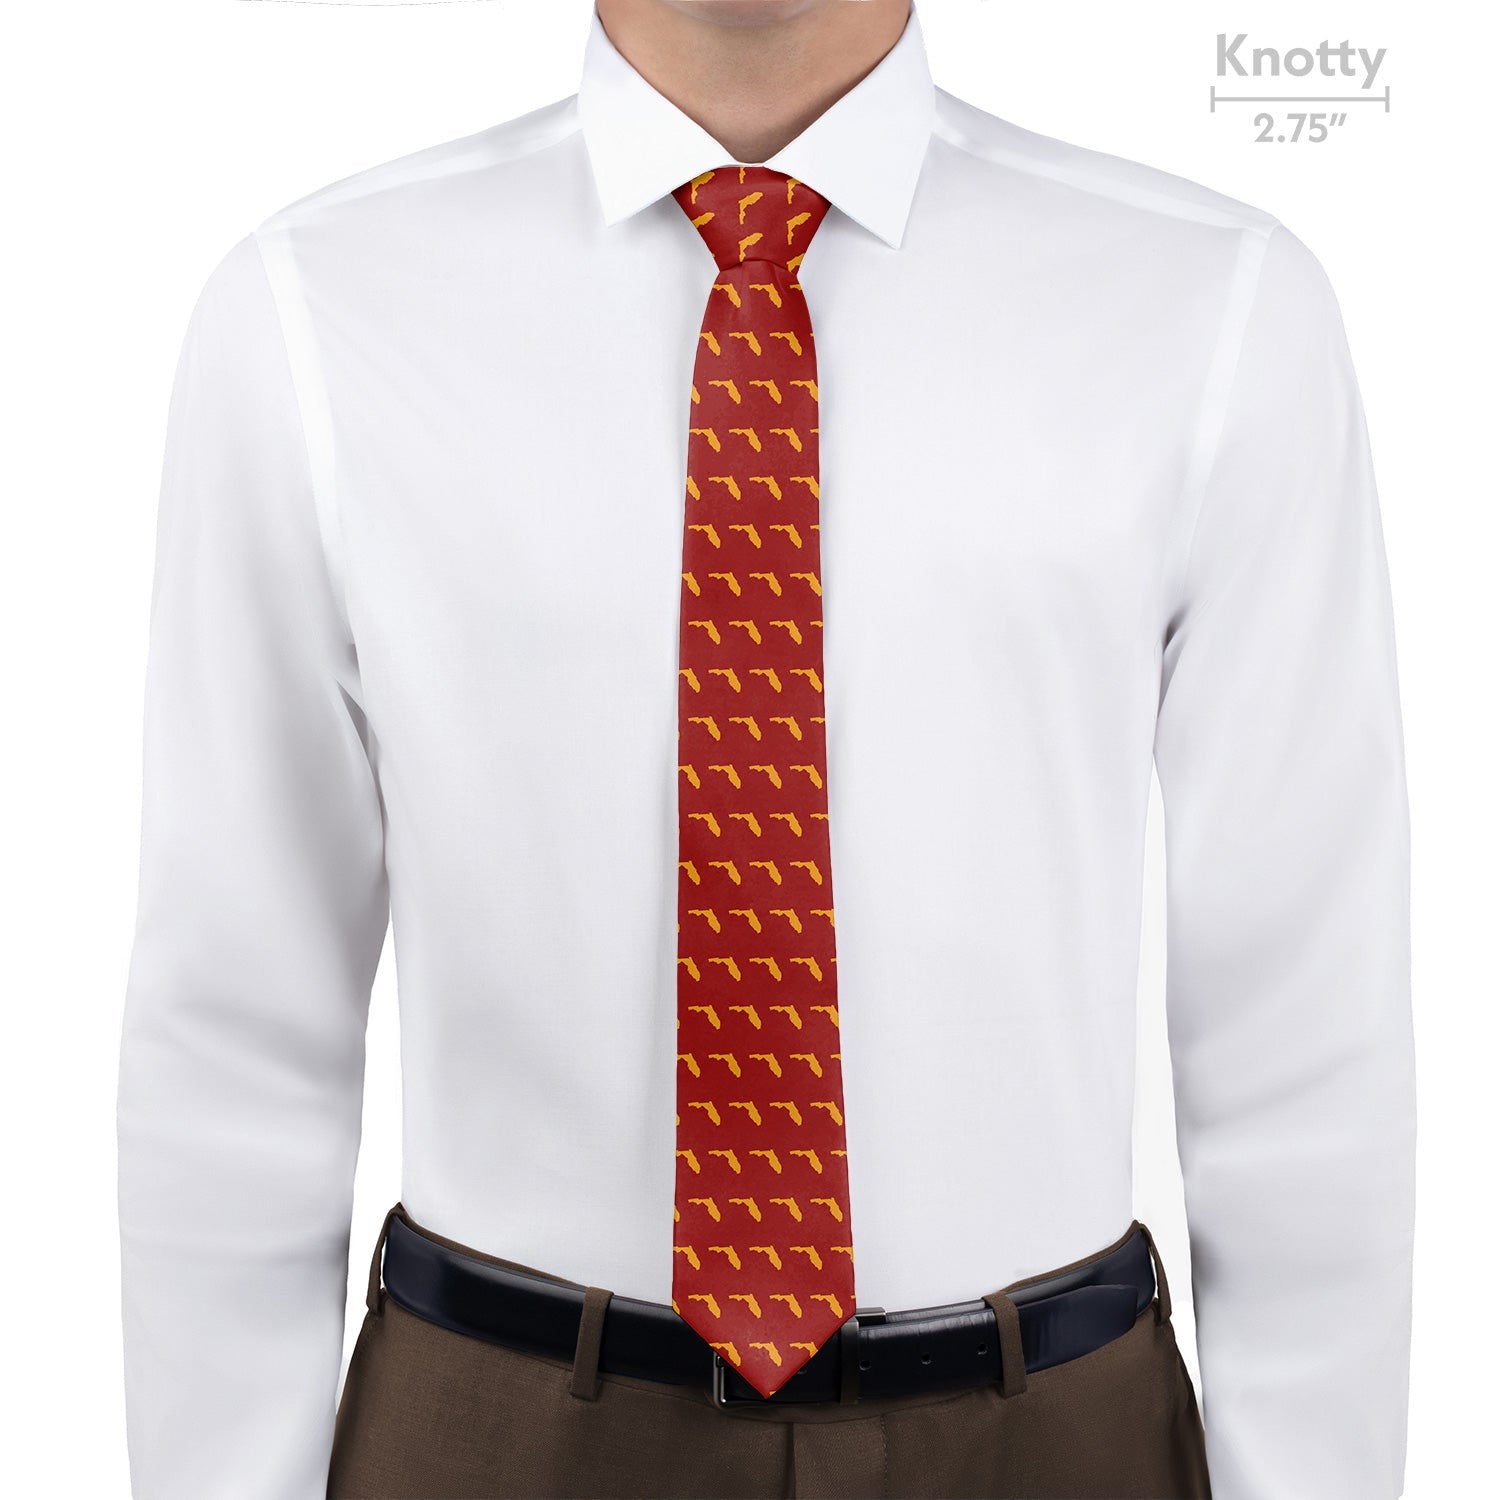 Florida State Outline Necktie - Knotty - Knotty Tie Co.